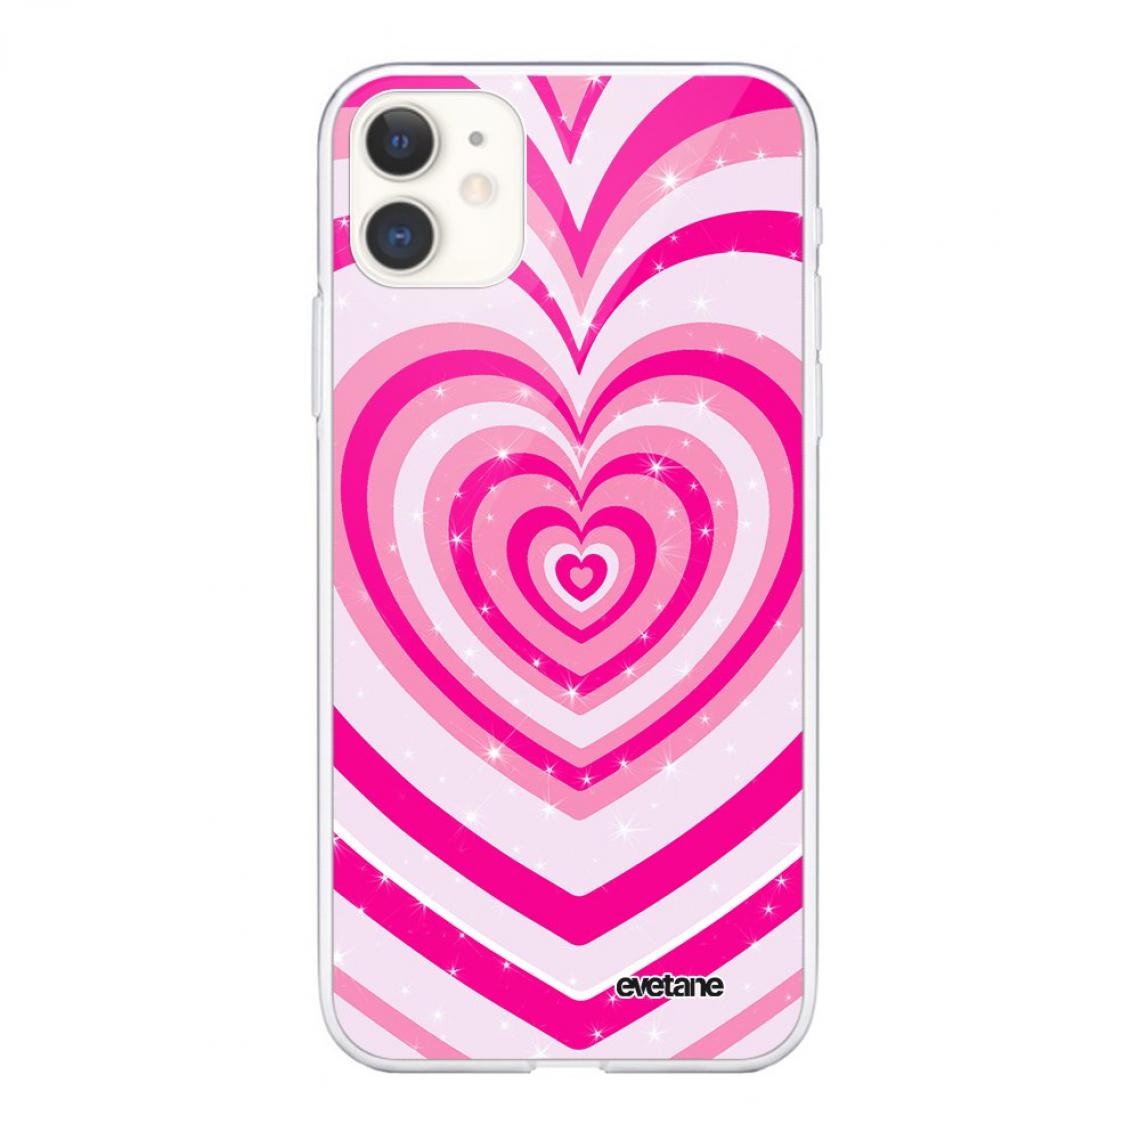 Evetane - Coque iPhone 11 Coeur Psychédélique Rose souple silicone transparente - Coque, étui smartphone